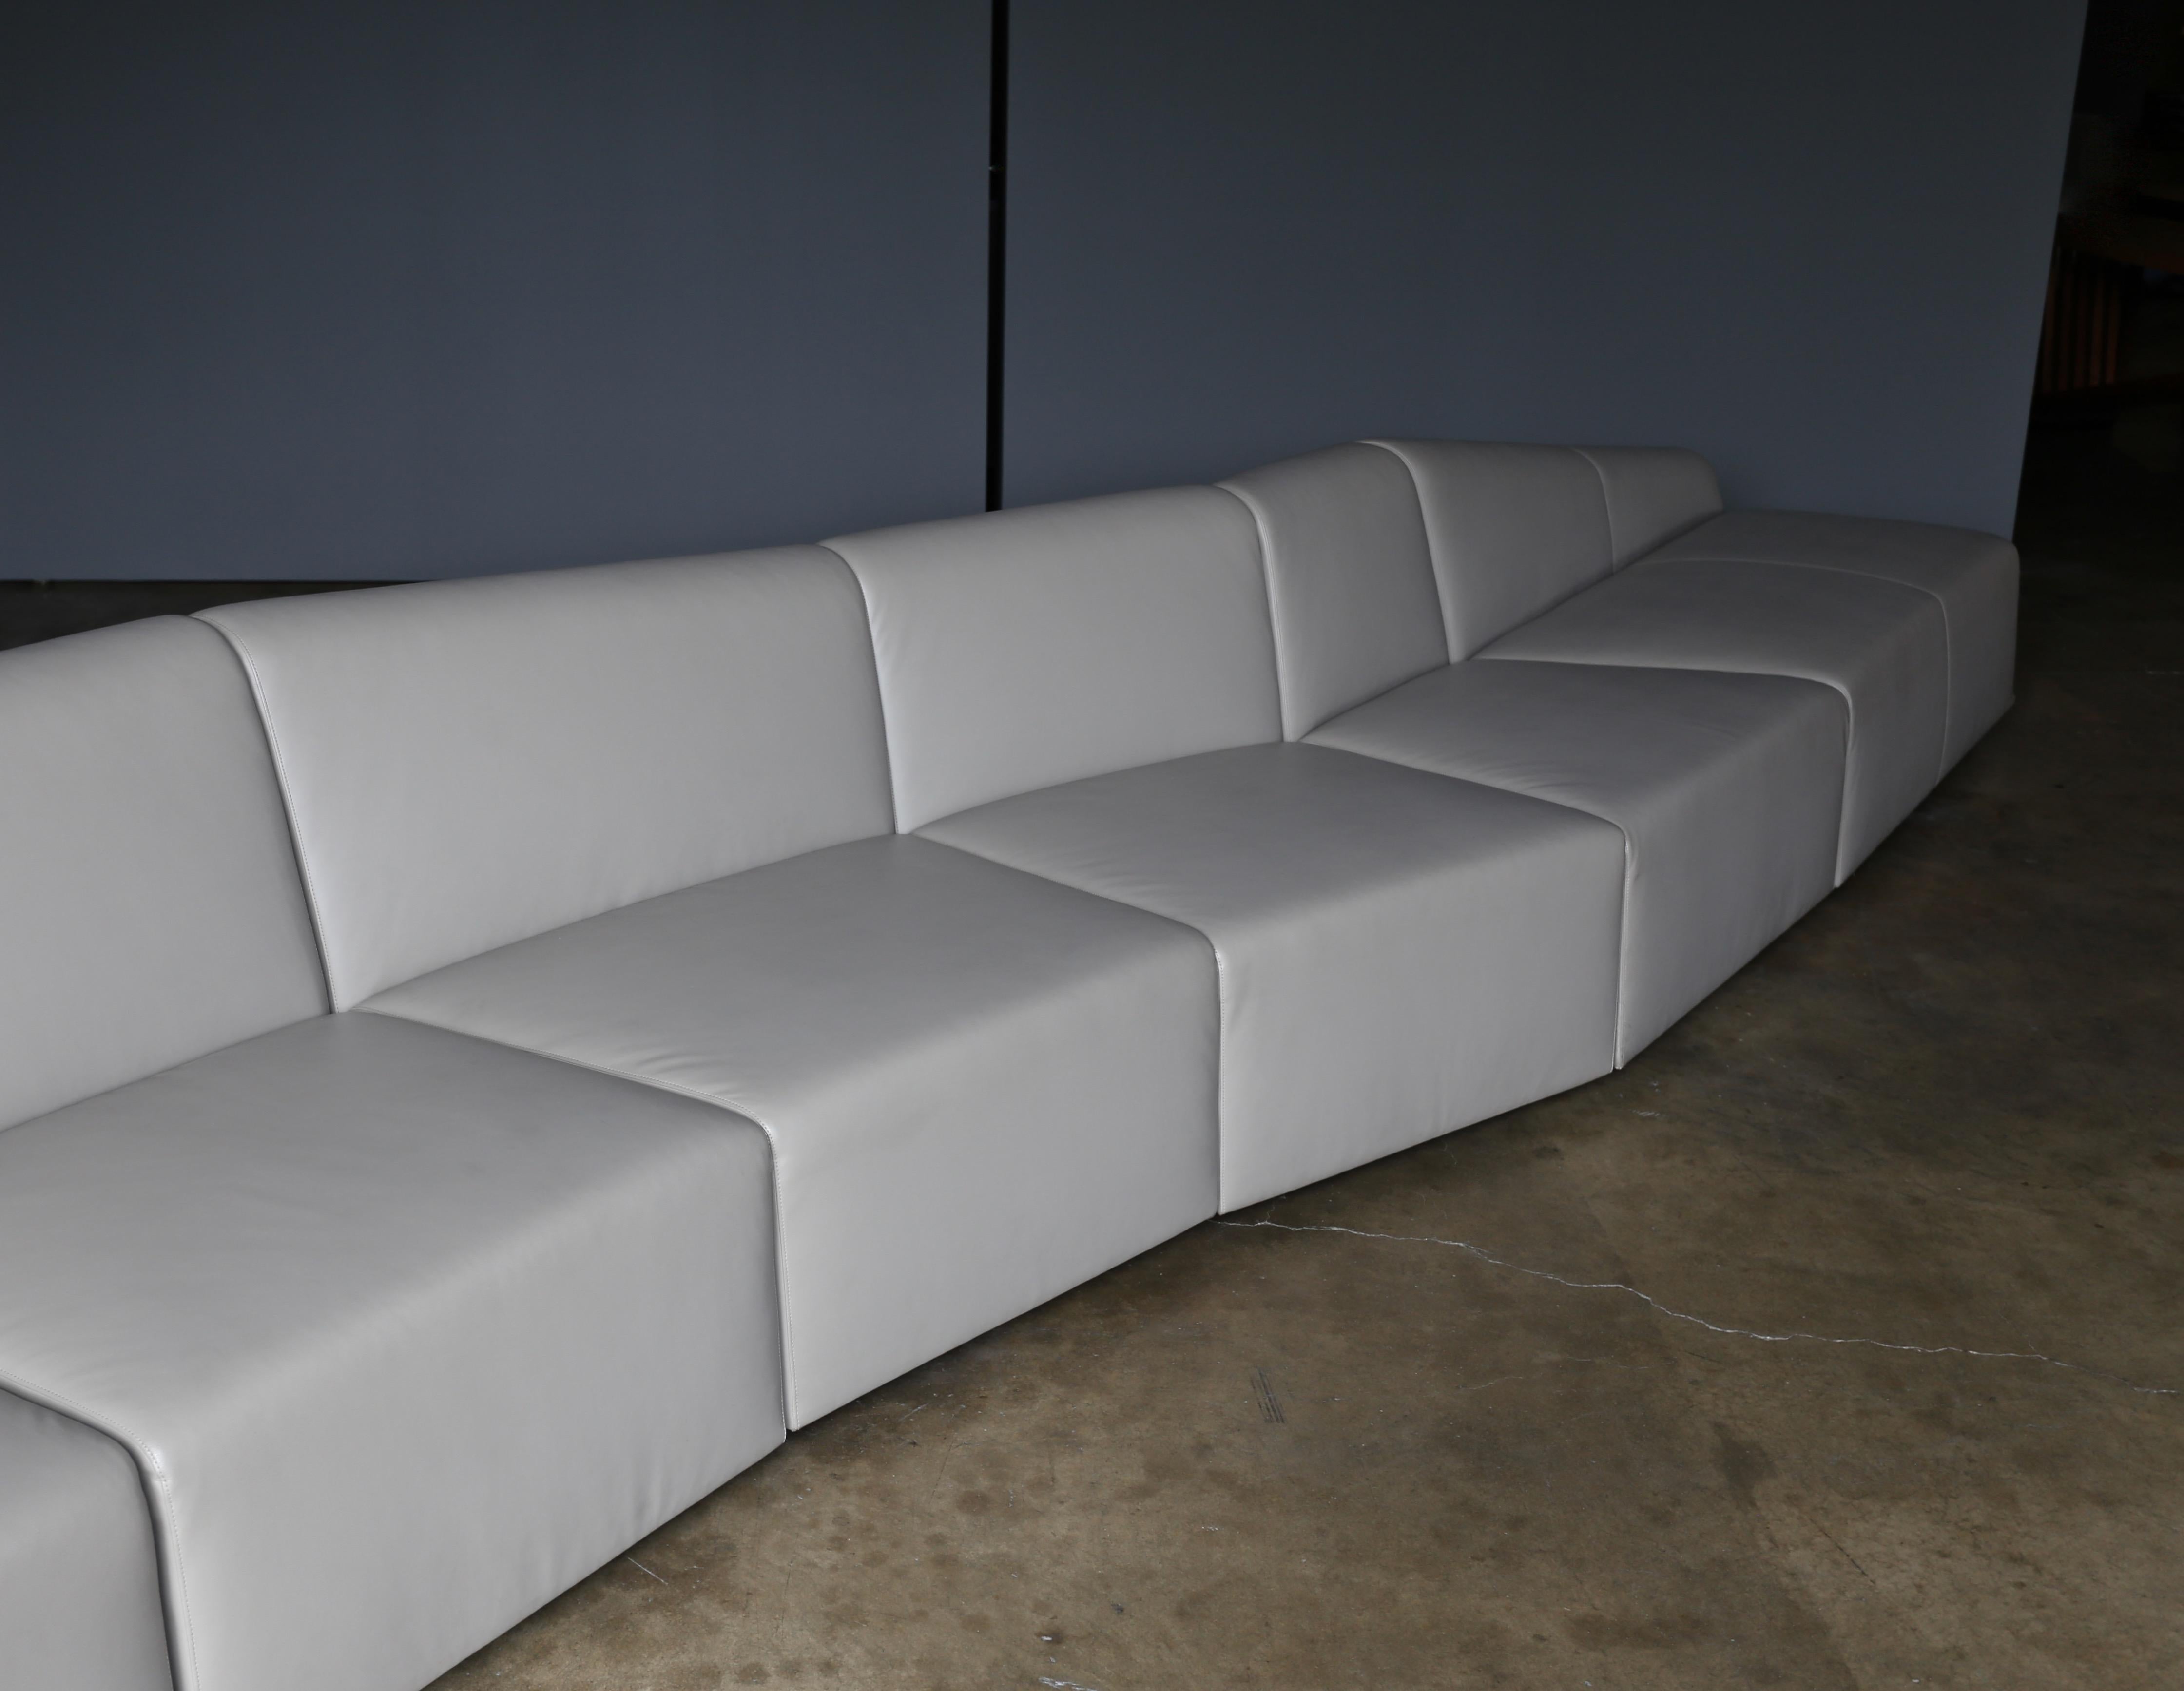 Fabric Patrick Jouin Modular Sofa for Bernhardt, 2017